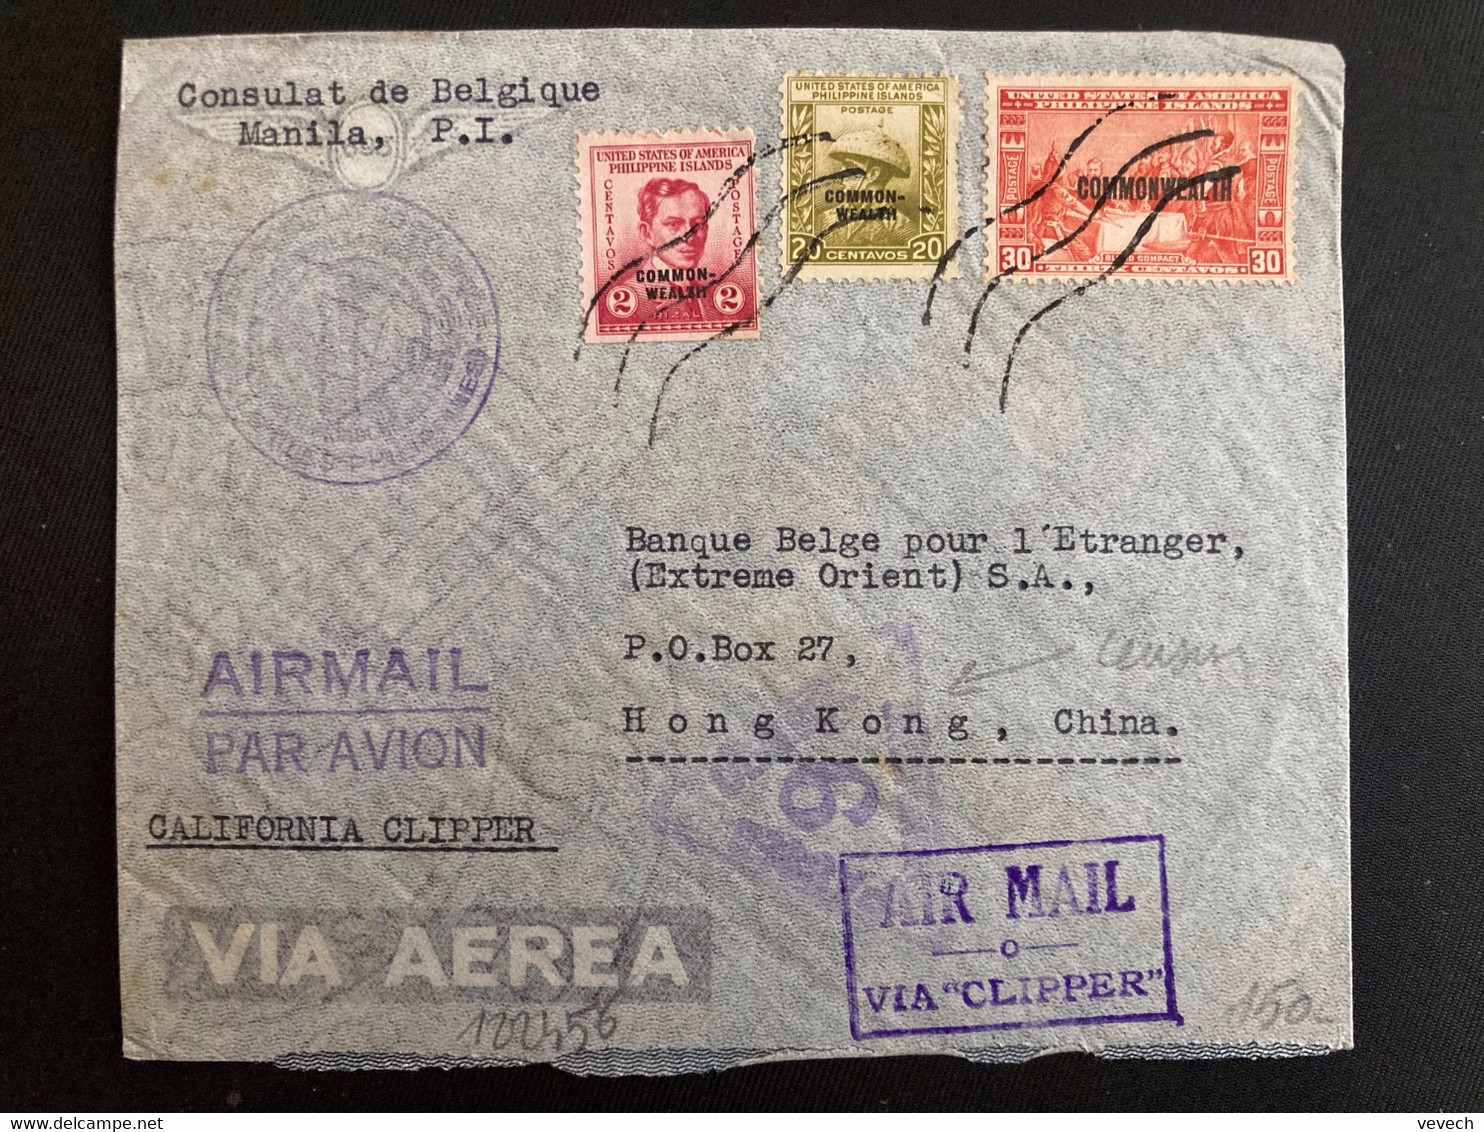 LETTRE Par Avion Via CALIFORNIA CLIPPER Pour HONG KONG CHINE TP 2 + 20 + 30 Surch. COMMONWEALTH OBL. +SEP 20 1940 MANILA - Philippines